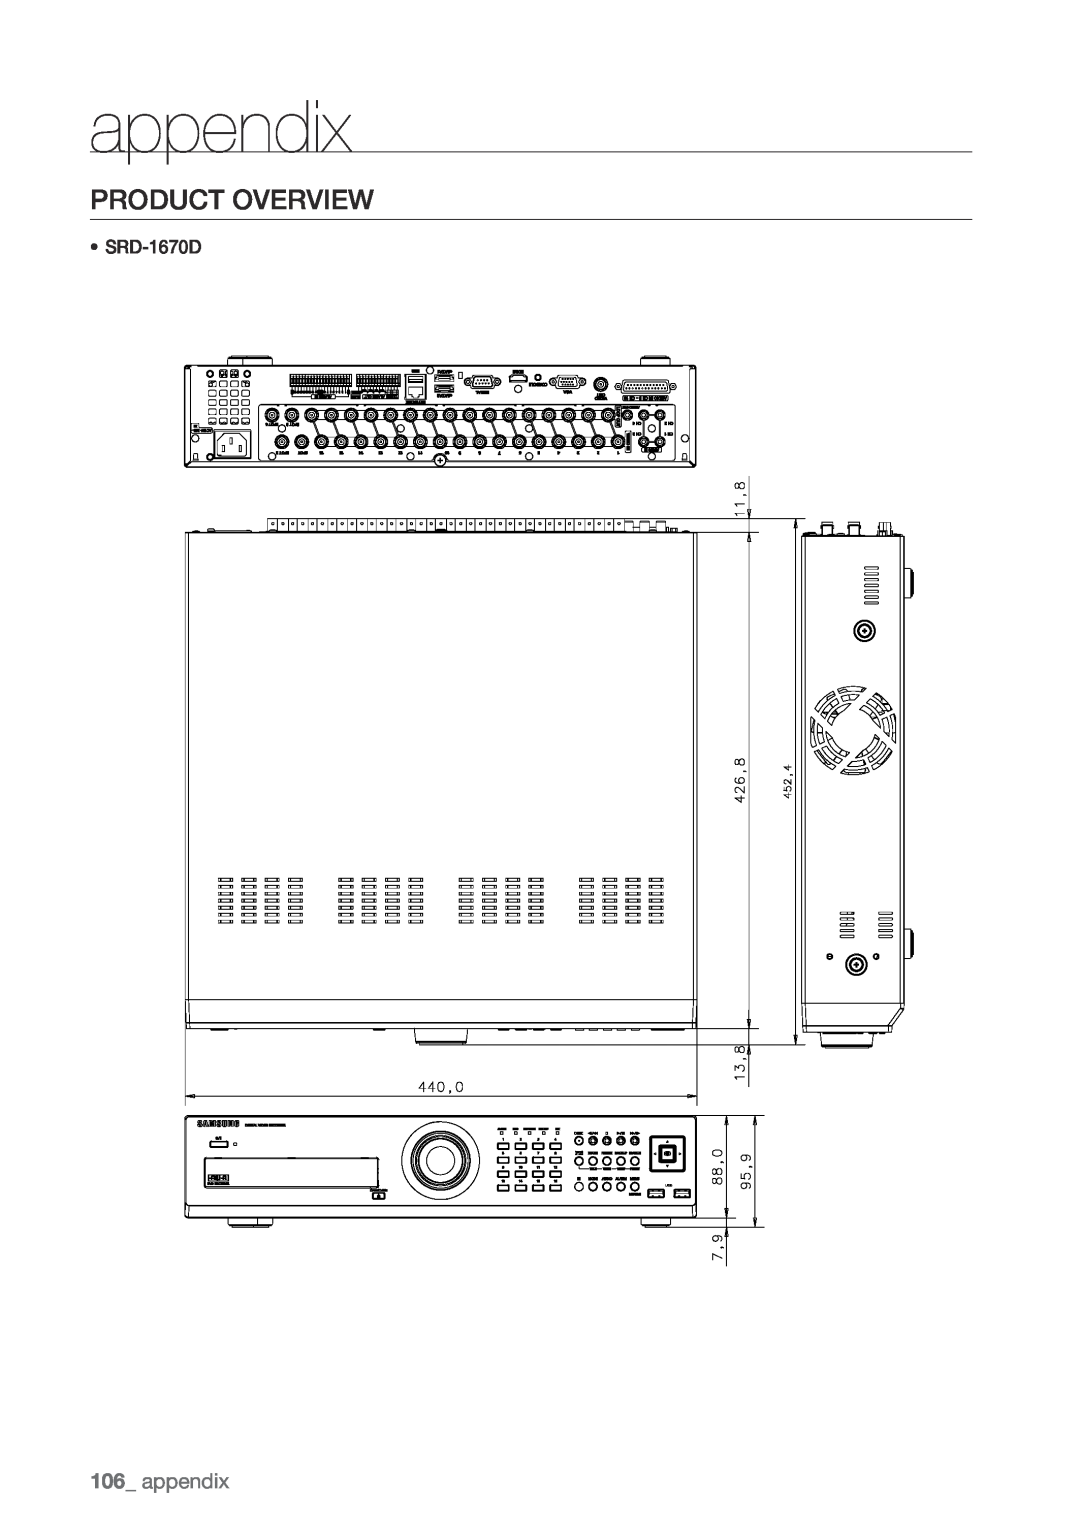 Samsung 1670D, 870D, SRD-850D, SRD-830D, SRD-1650D, SRD-1630D, SRD-1610D user manual Product OVERView, appendix 